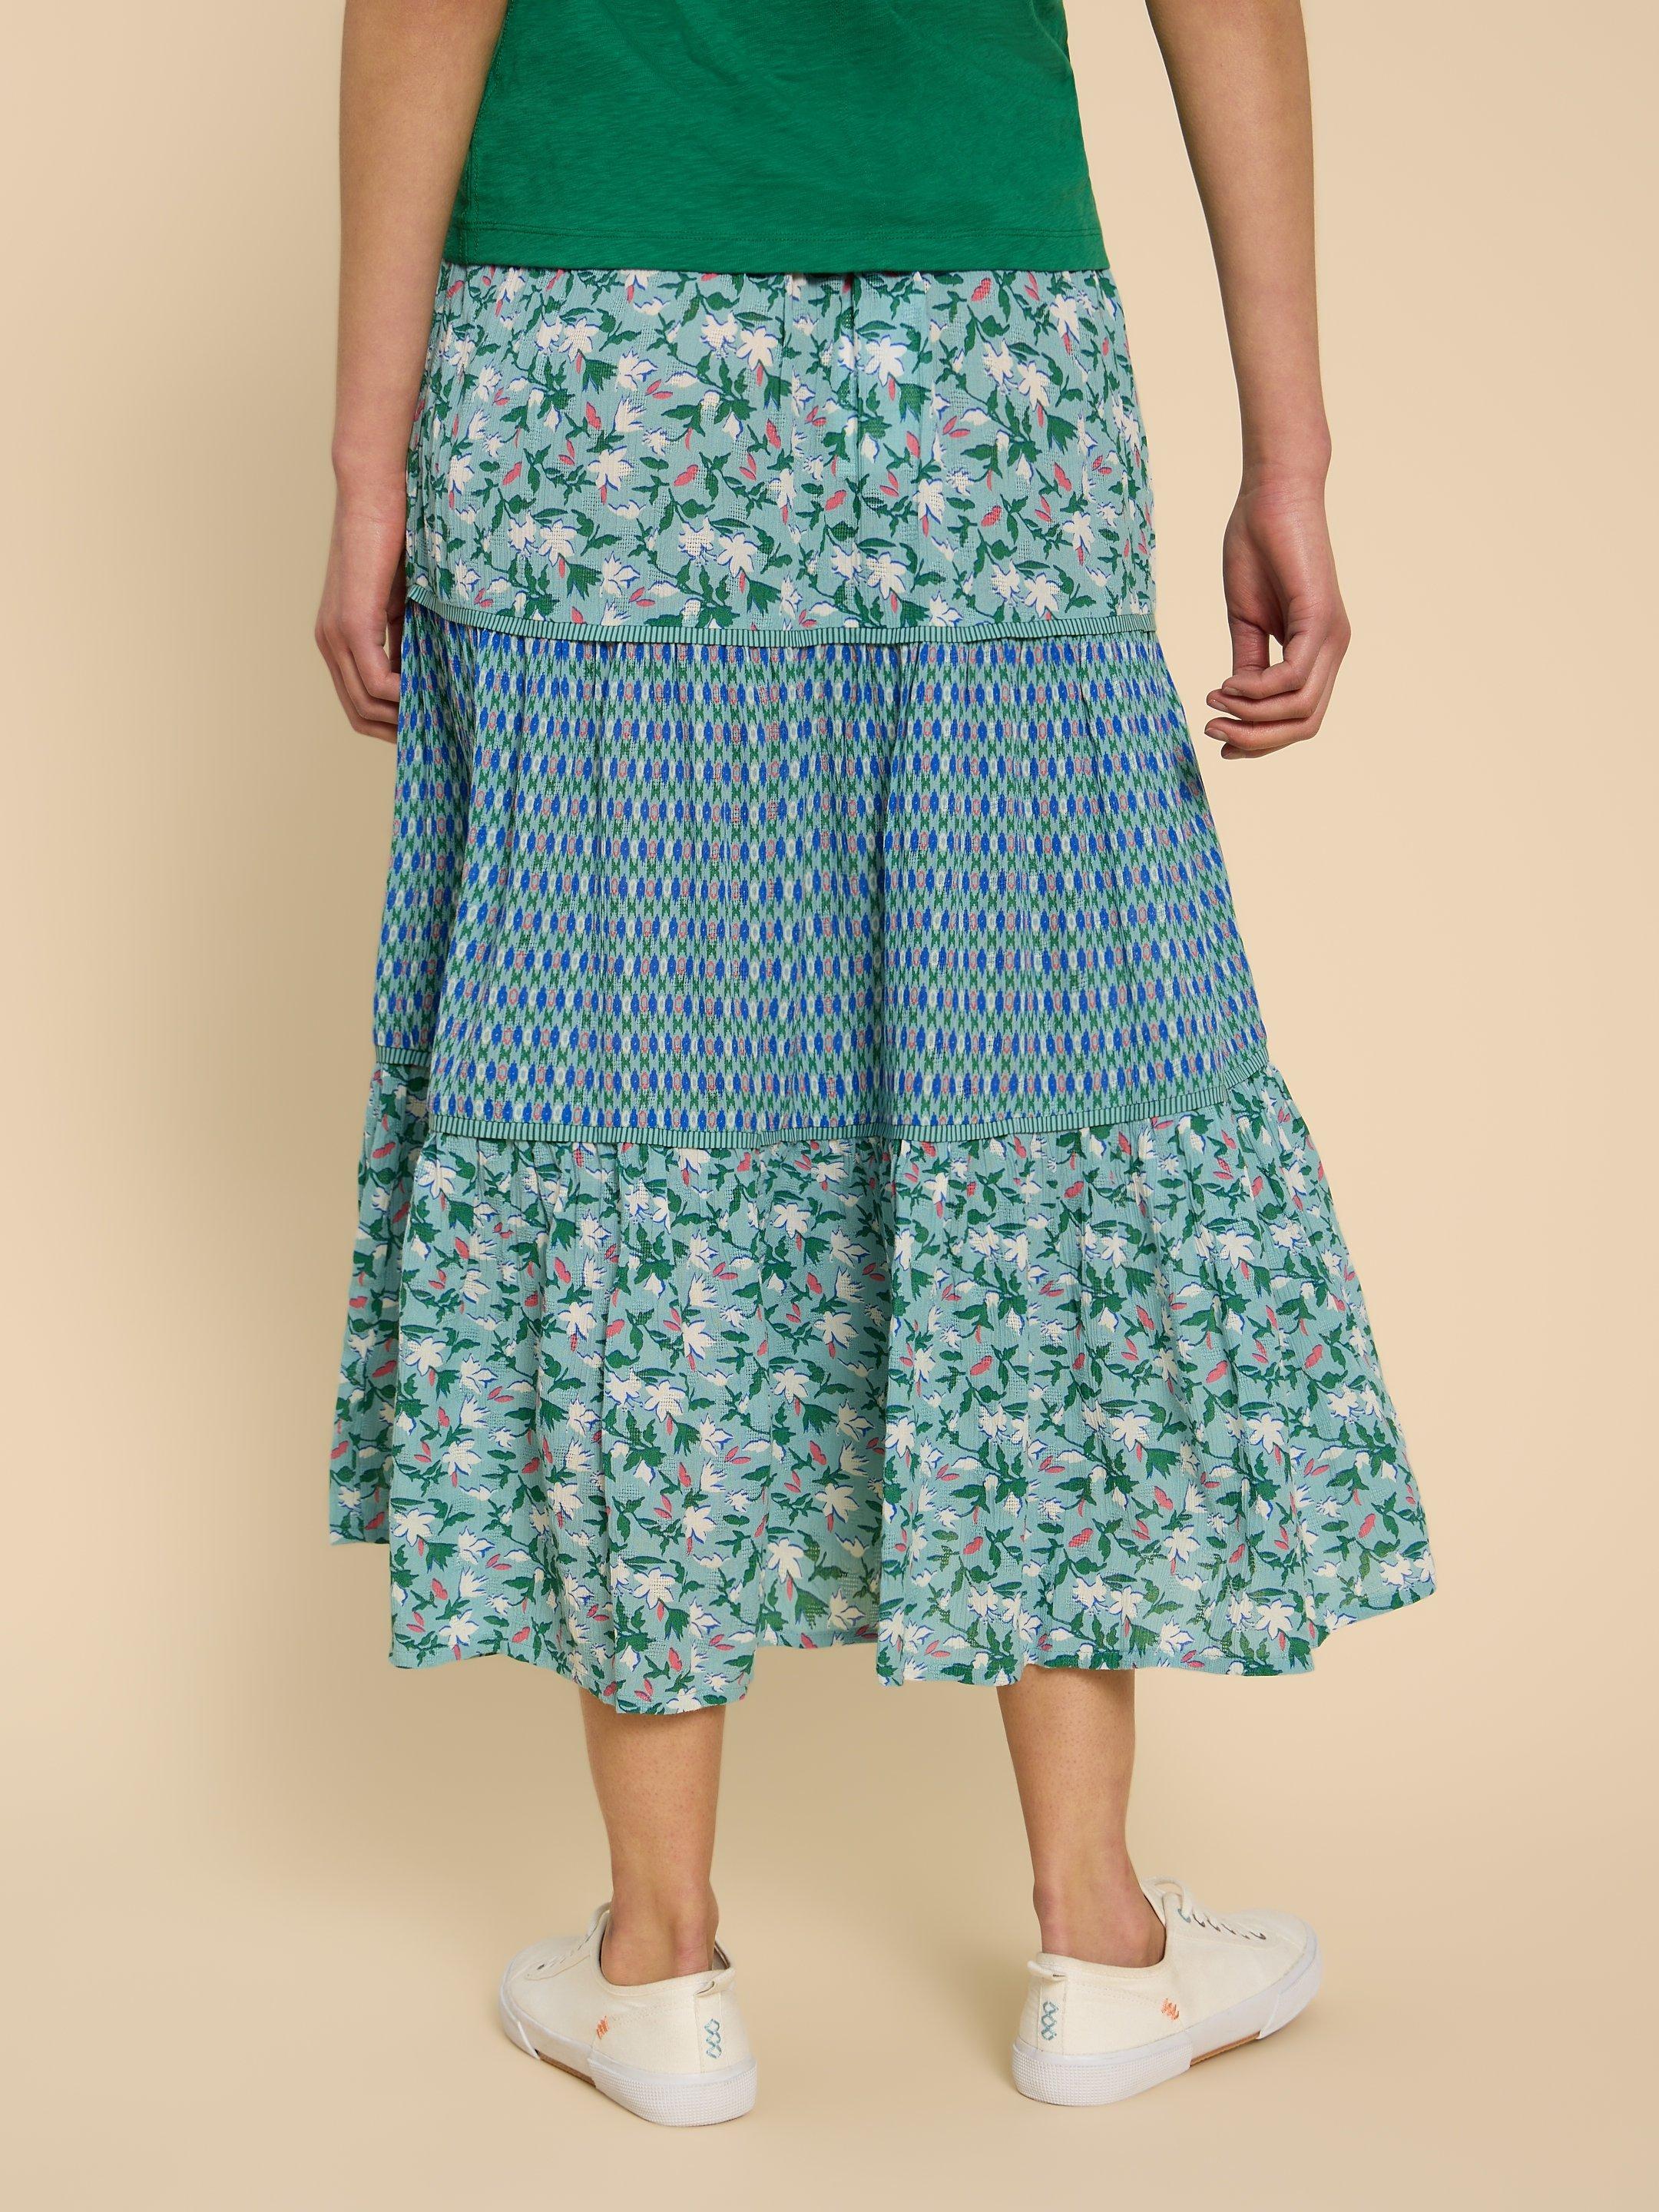 Mabel Mixed Print Skirt in TEAL PR - MODEL BACK